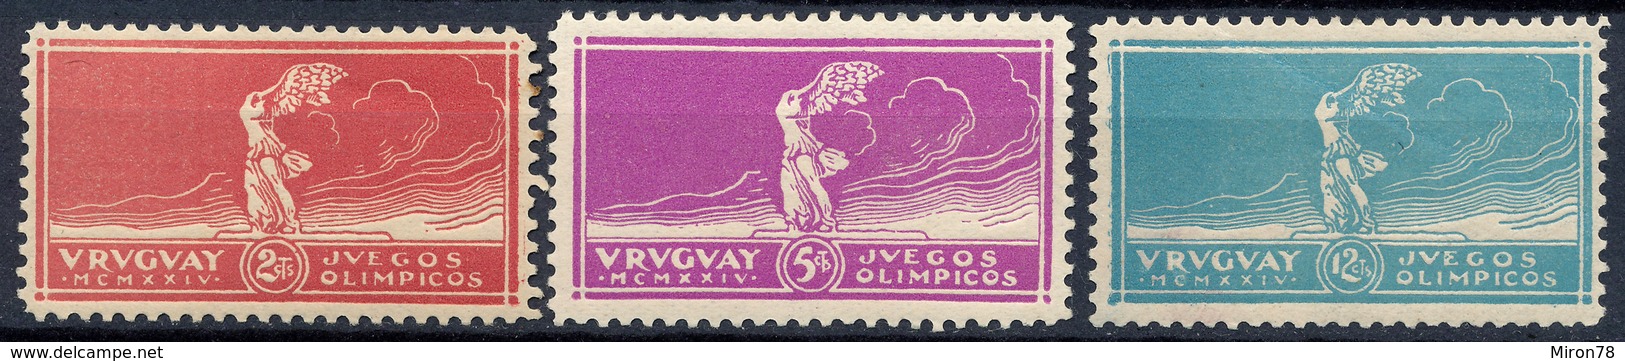 Stamps URUGUAY 1924 MH - Uruguay